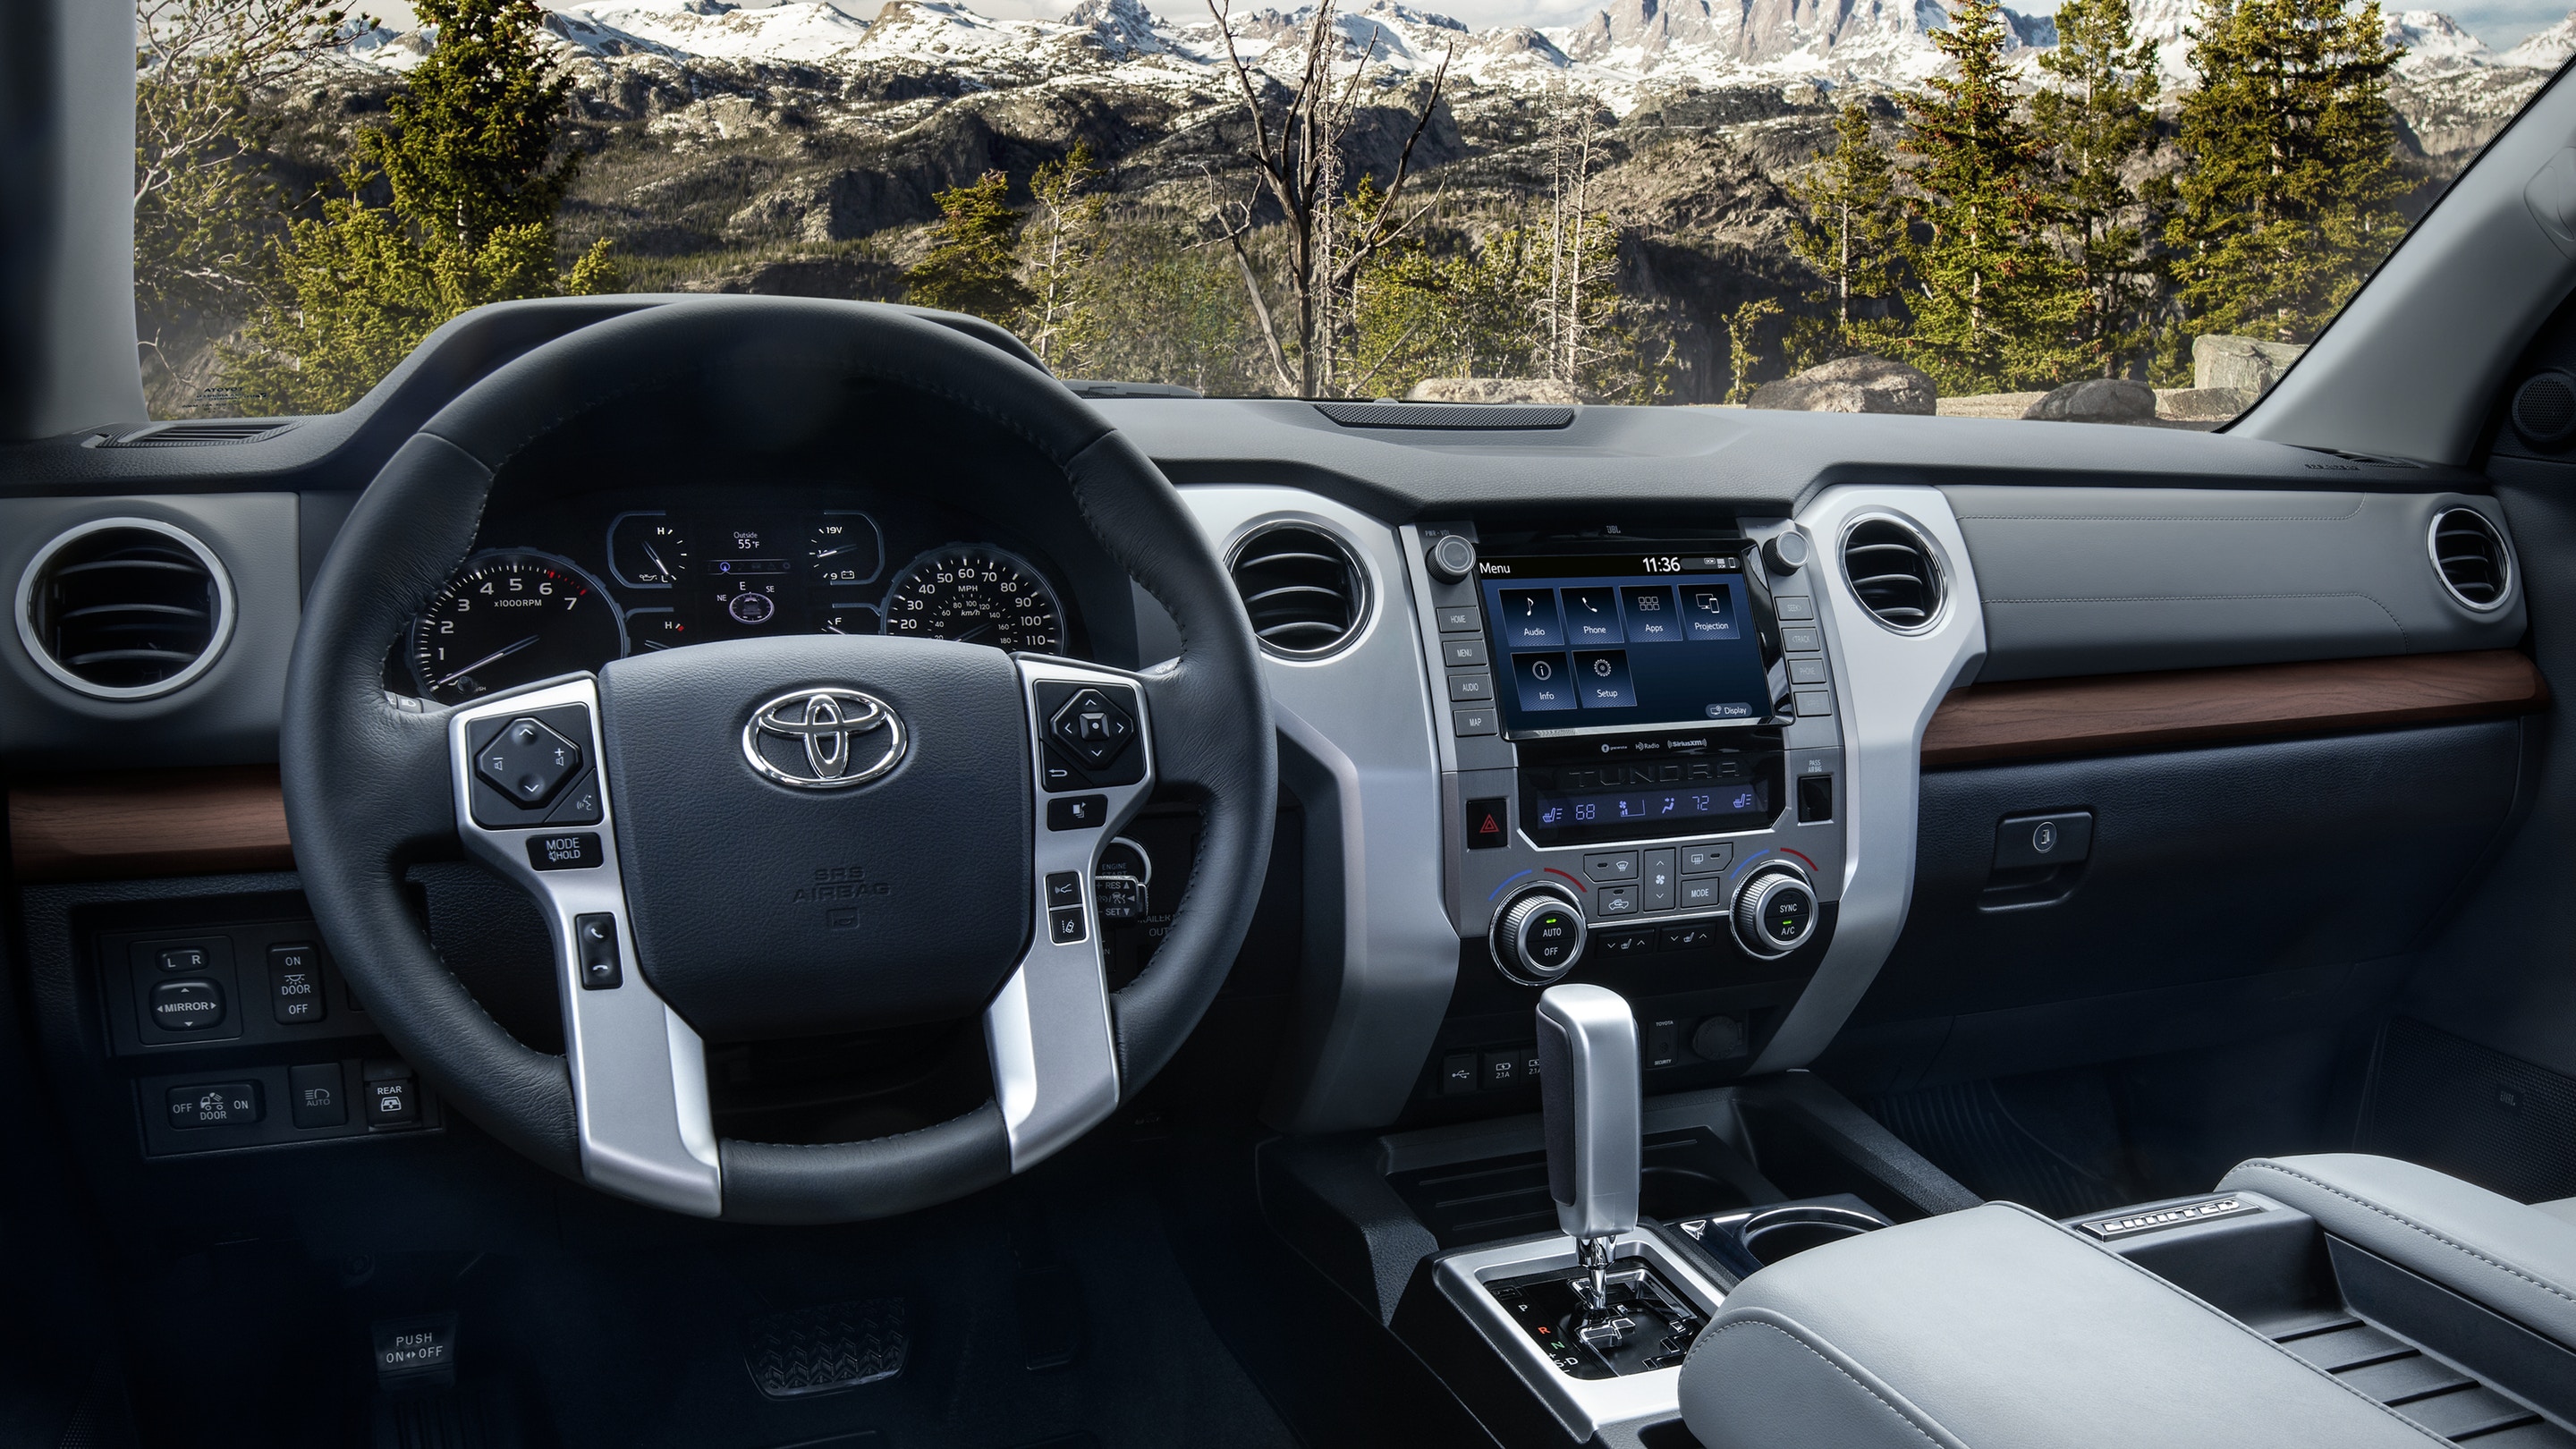 2020 Toyota Tundra For Sale Near Westport Ct